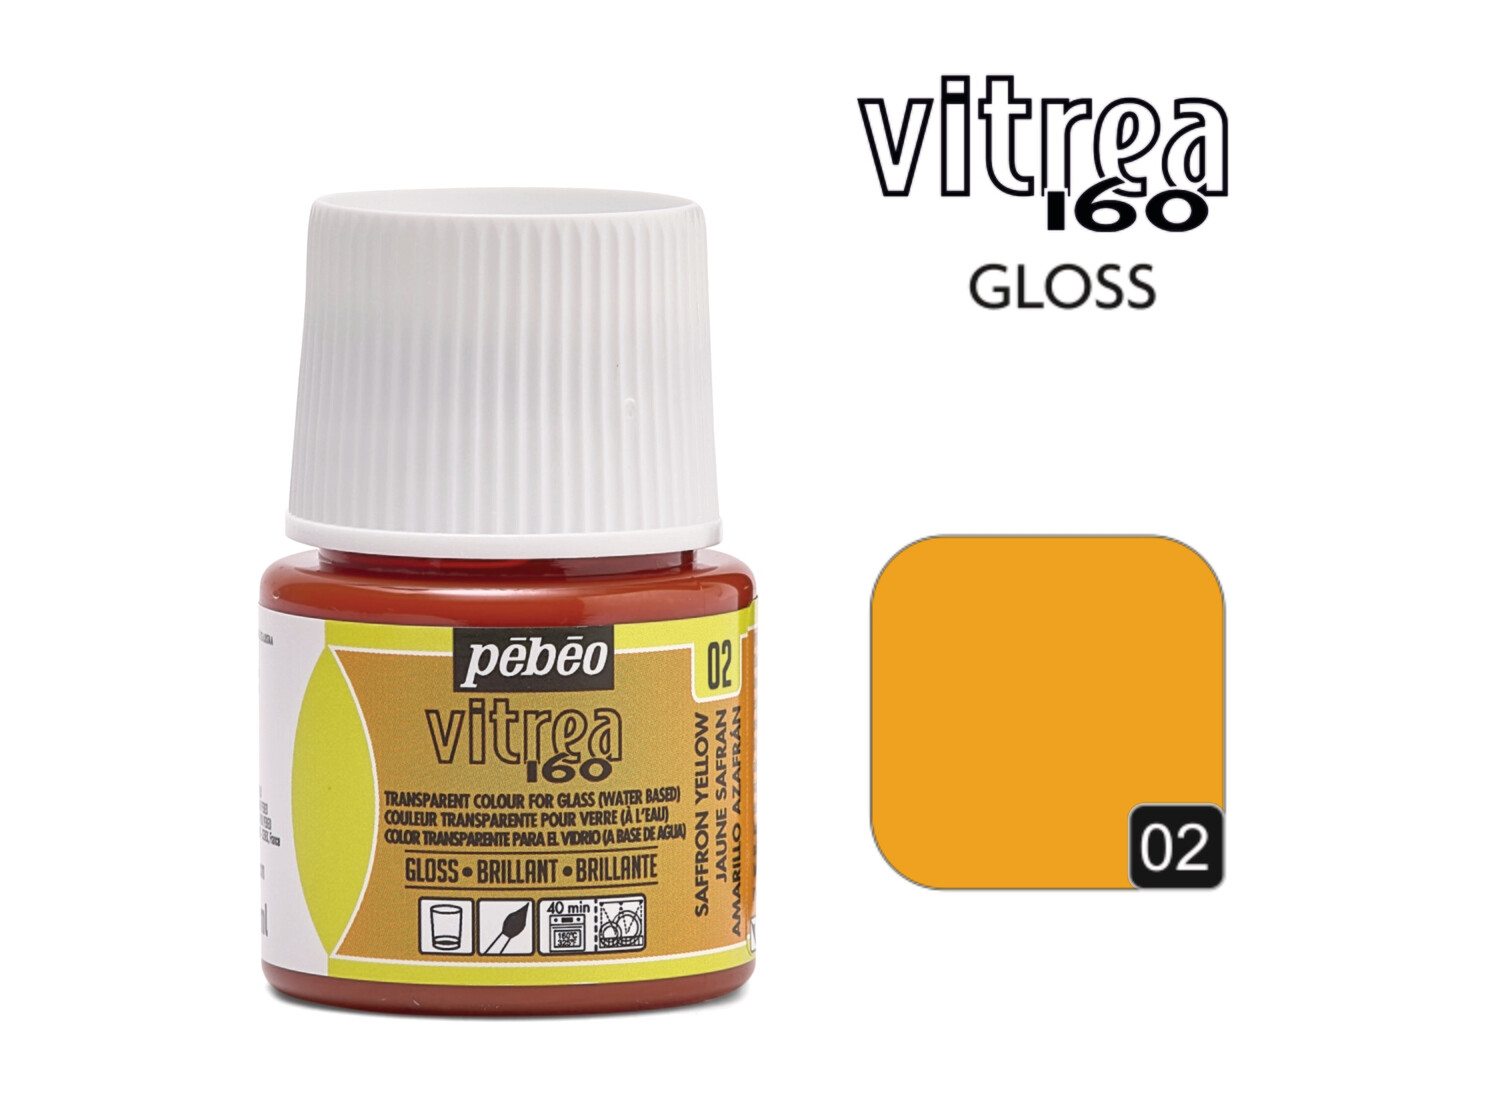 Vitrea-160 Gloss 45ml 02T Safron Yellow